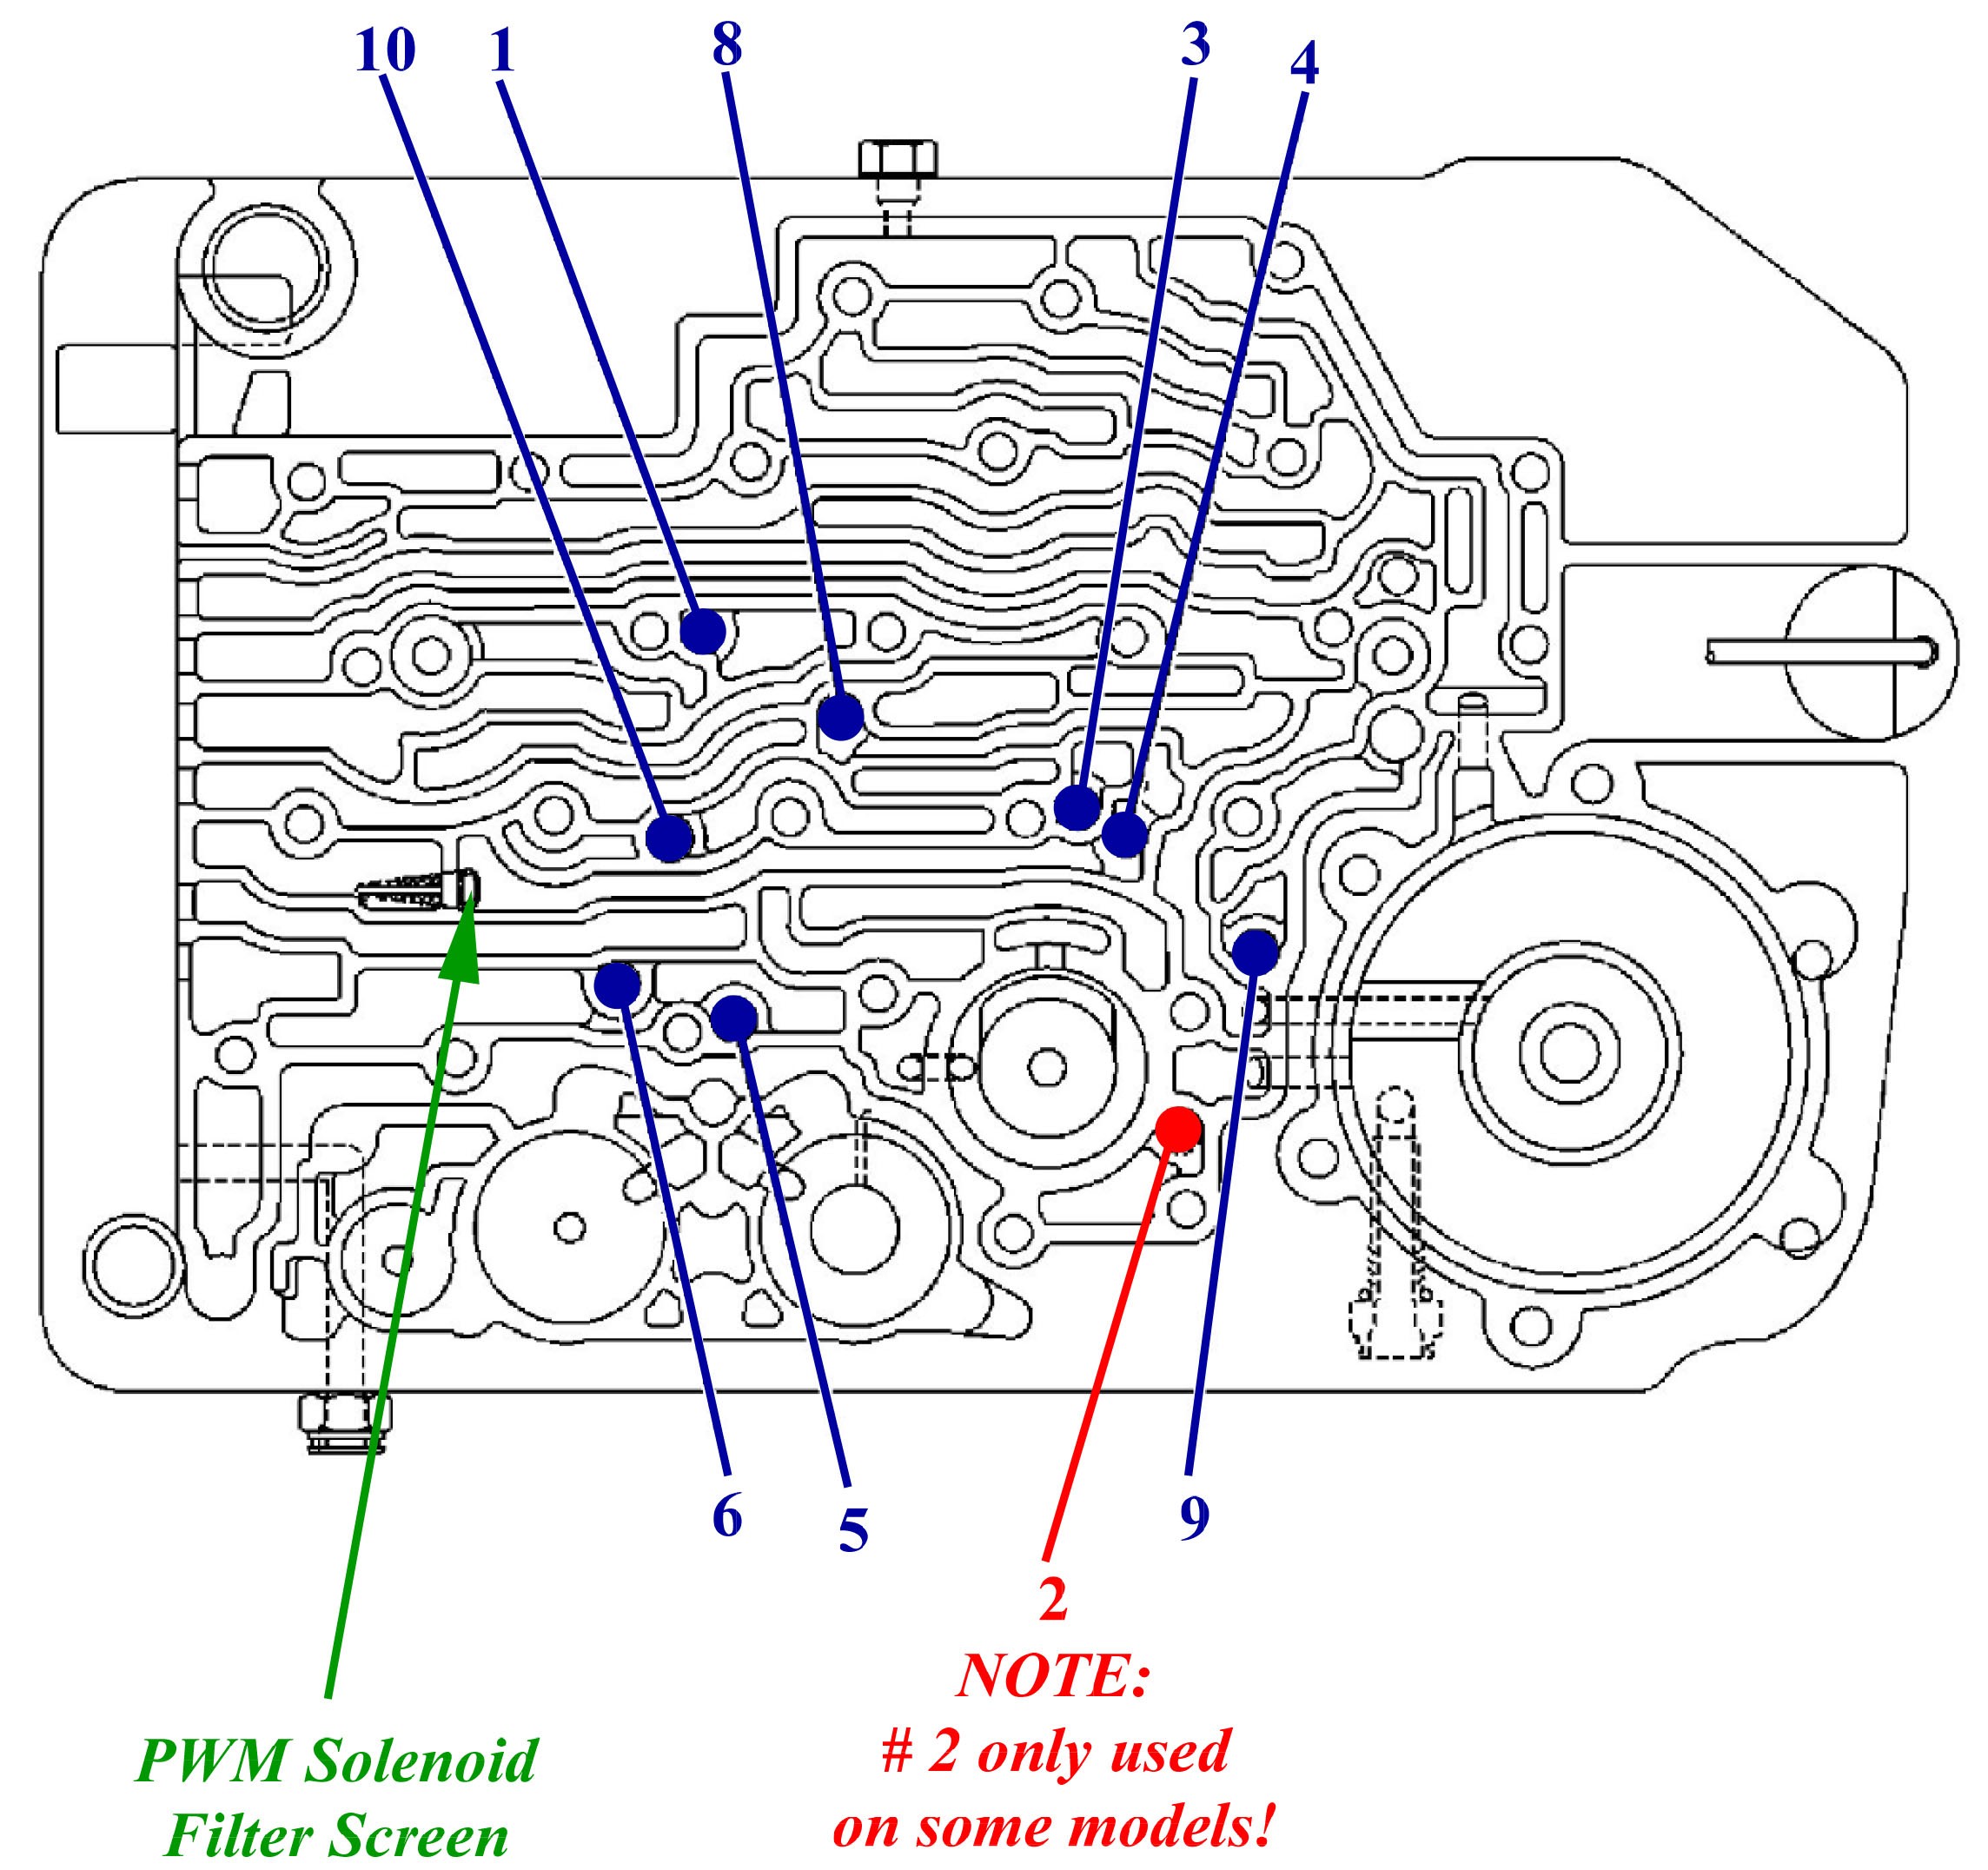 Ford Ranger Parts Diagram 4r100 Transmission Valve Body Diagram E4od Parts Diagram Wiring Of Ford Ranger Parts Diagram